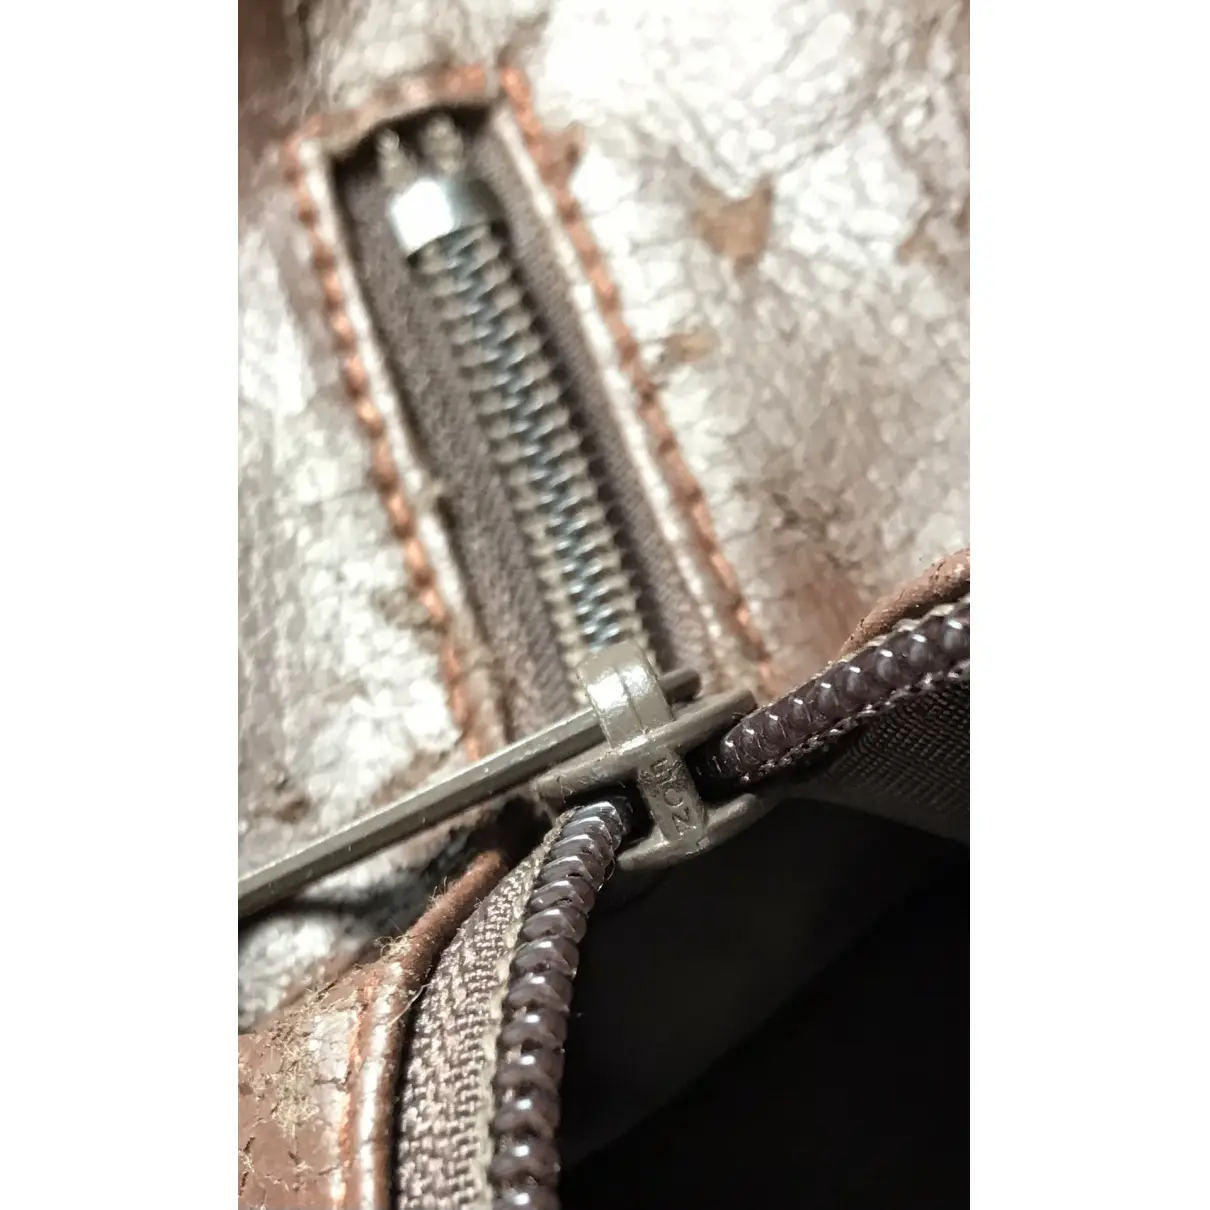 Leather satchel Trussardi